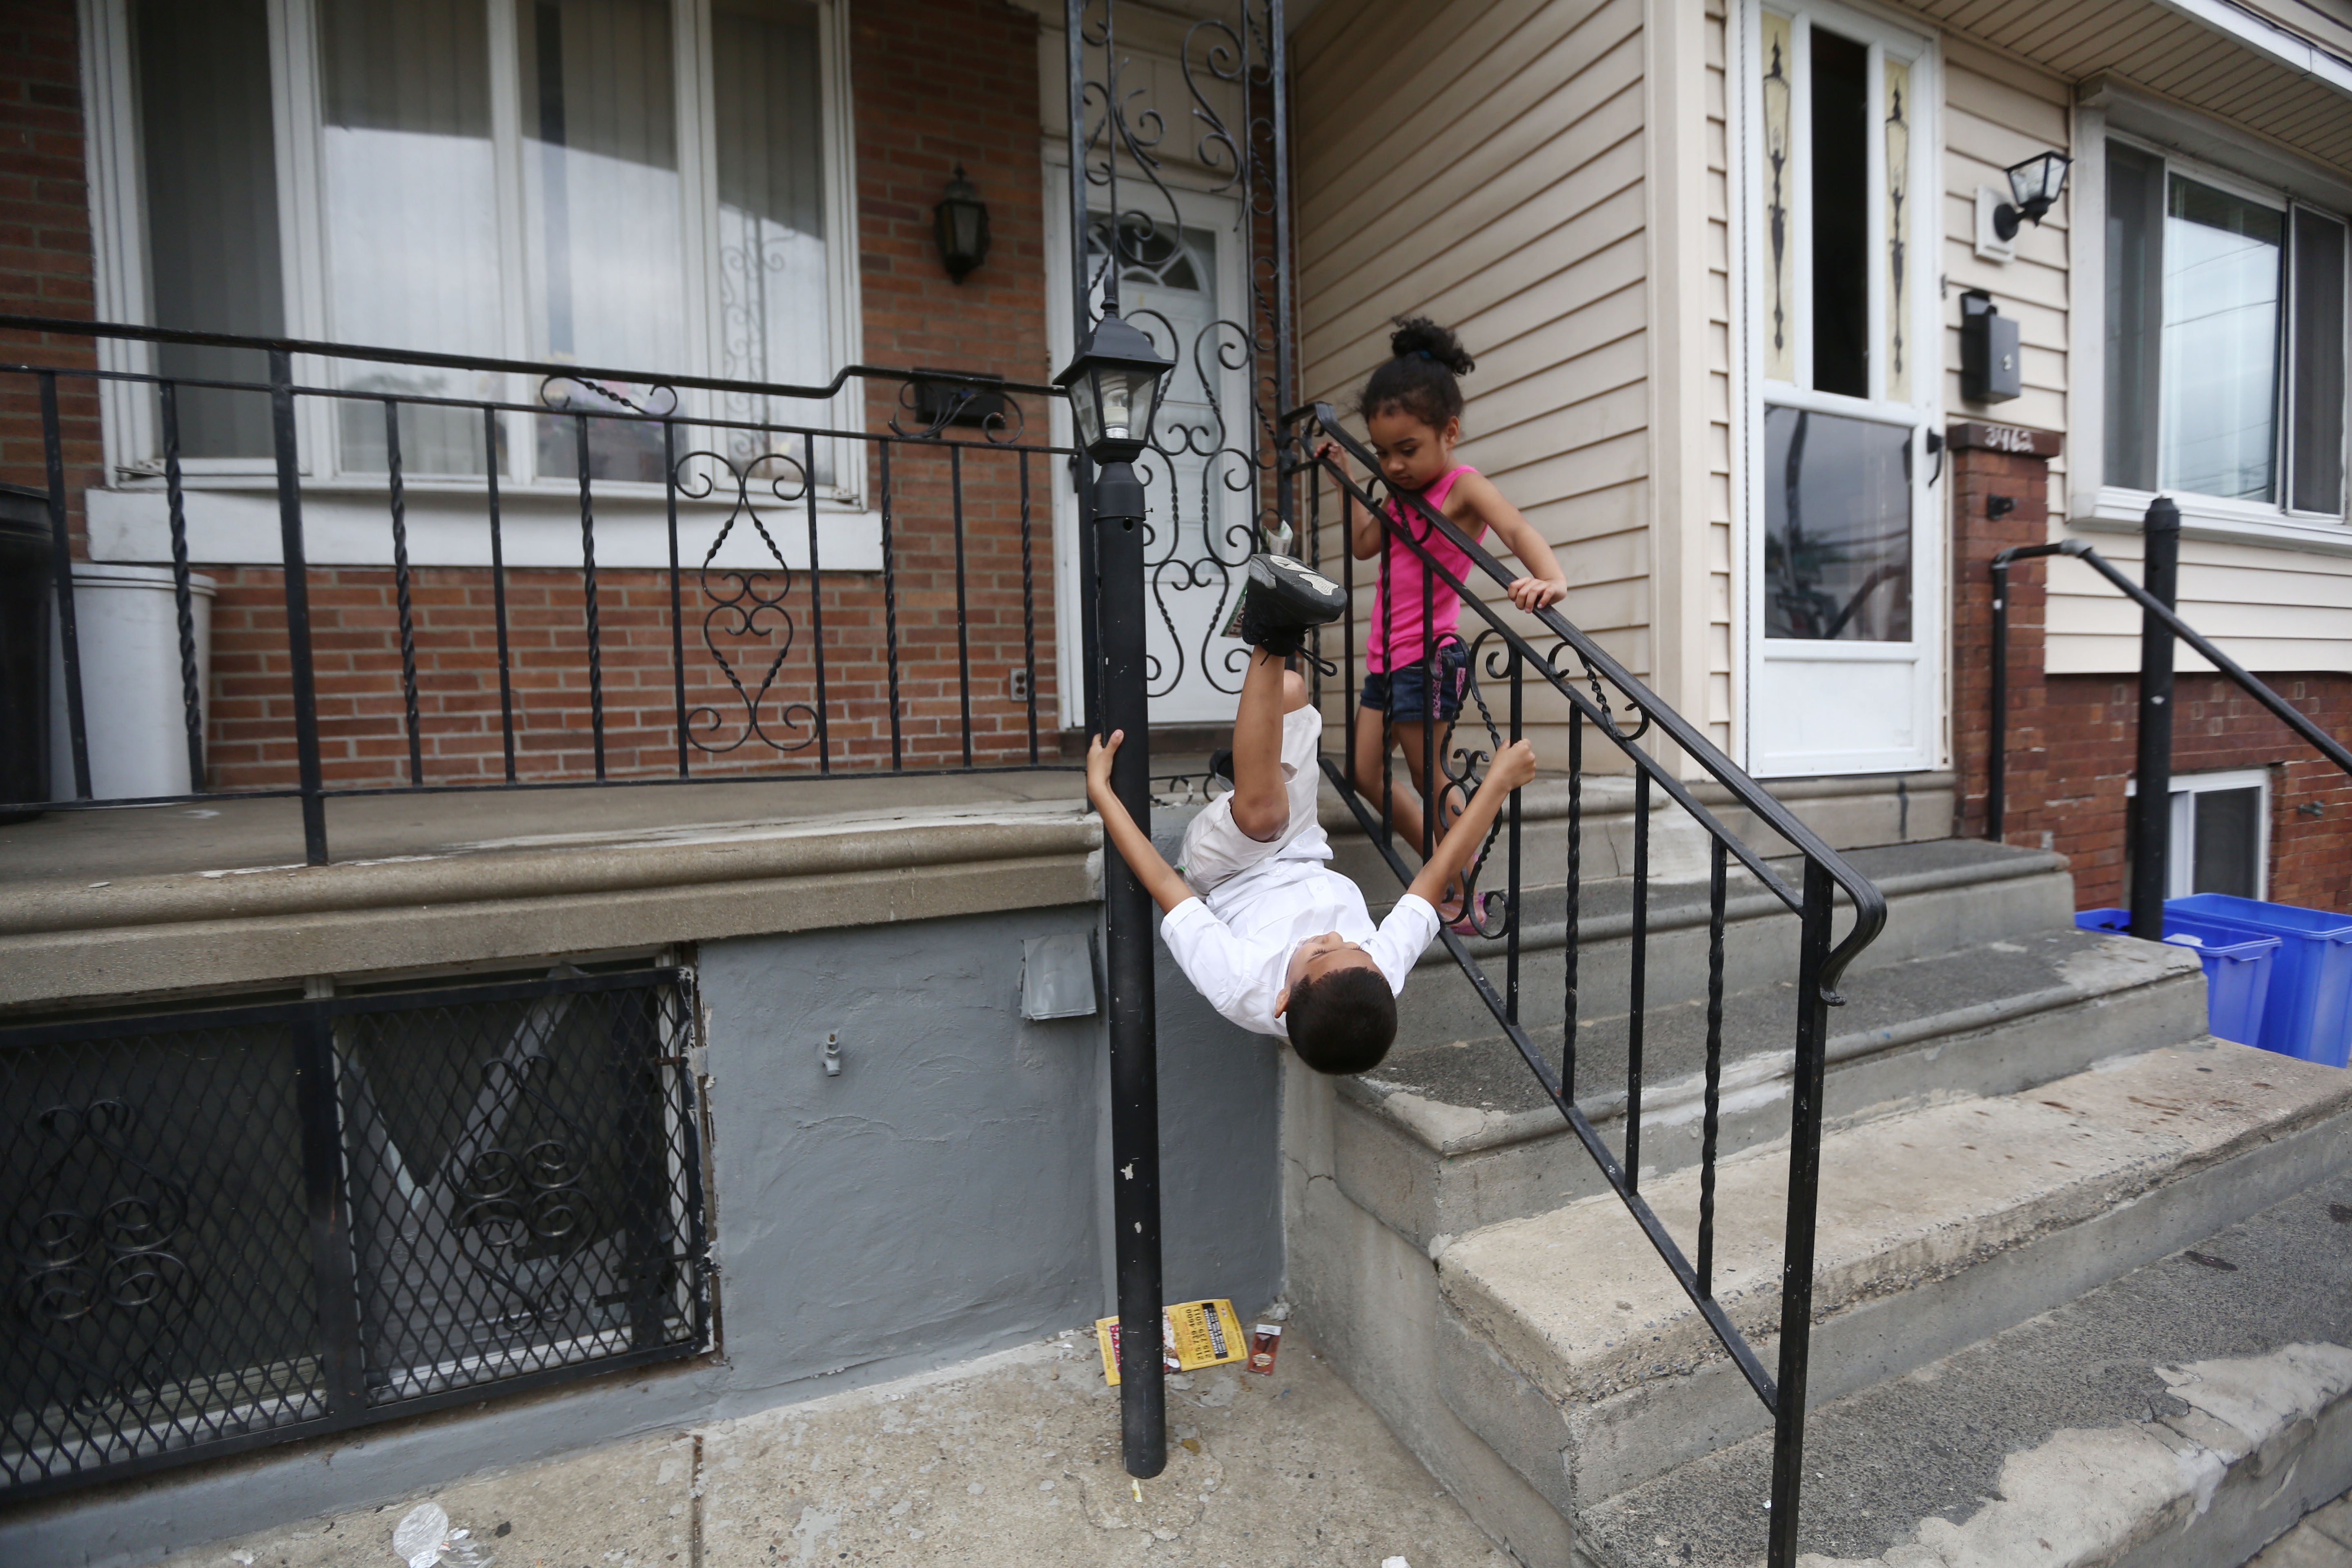 Children on Savannah’s block in Kensington play on a railing. (Jessica Kourkounis/For Keystone Crossroads)